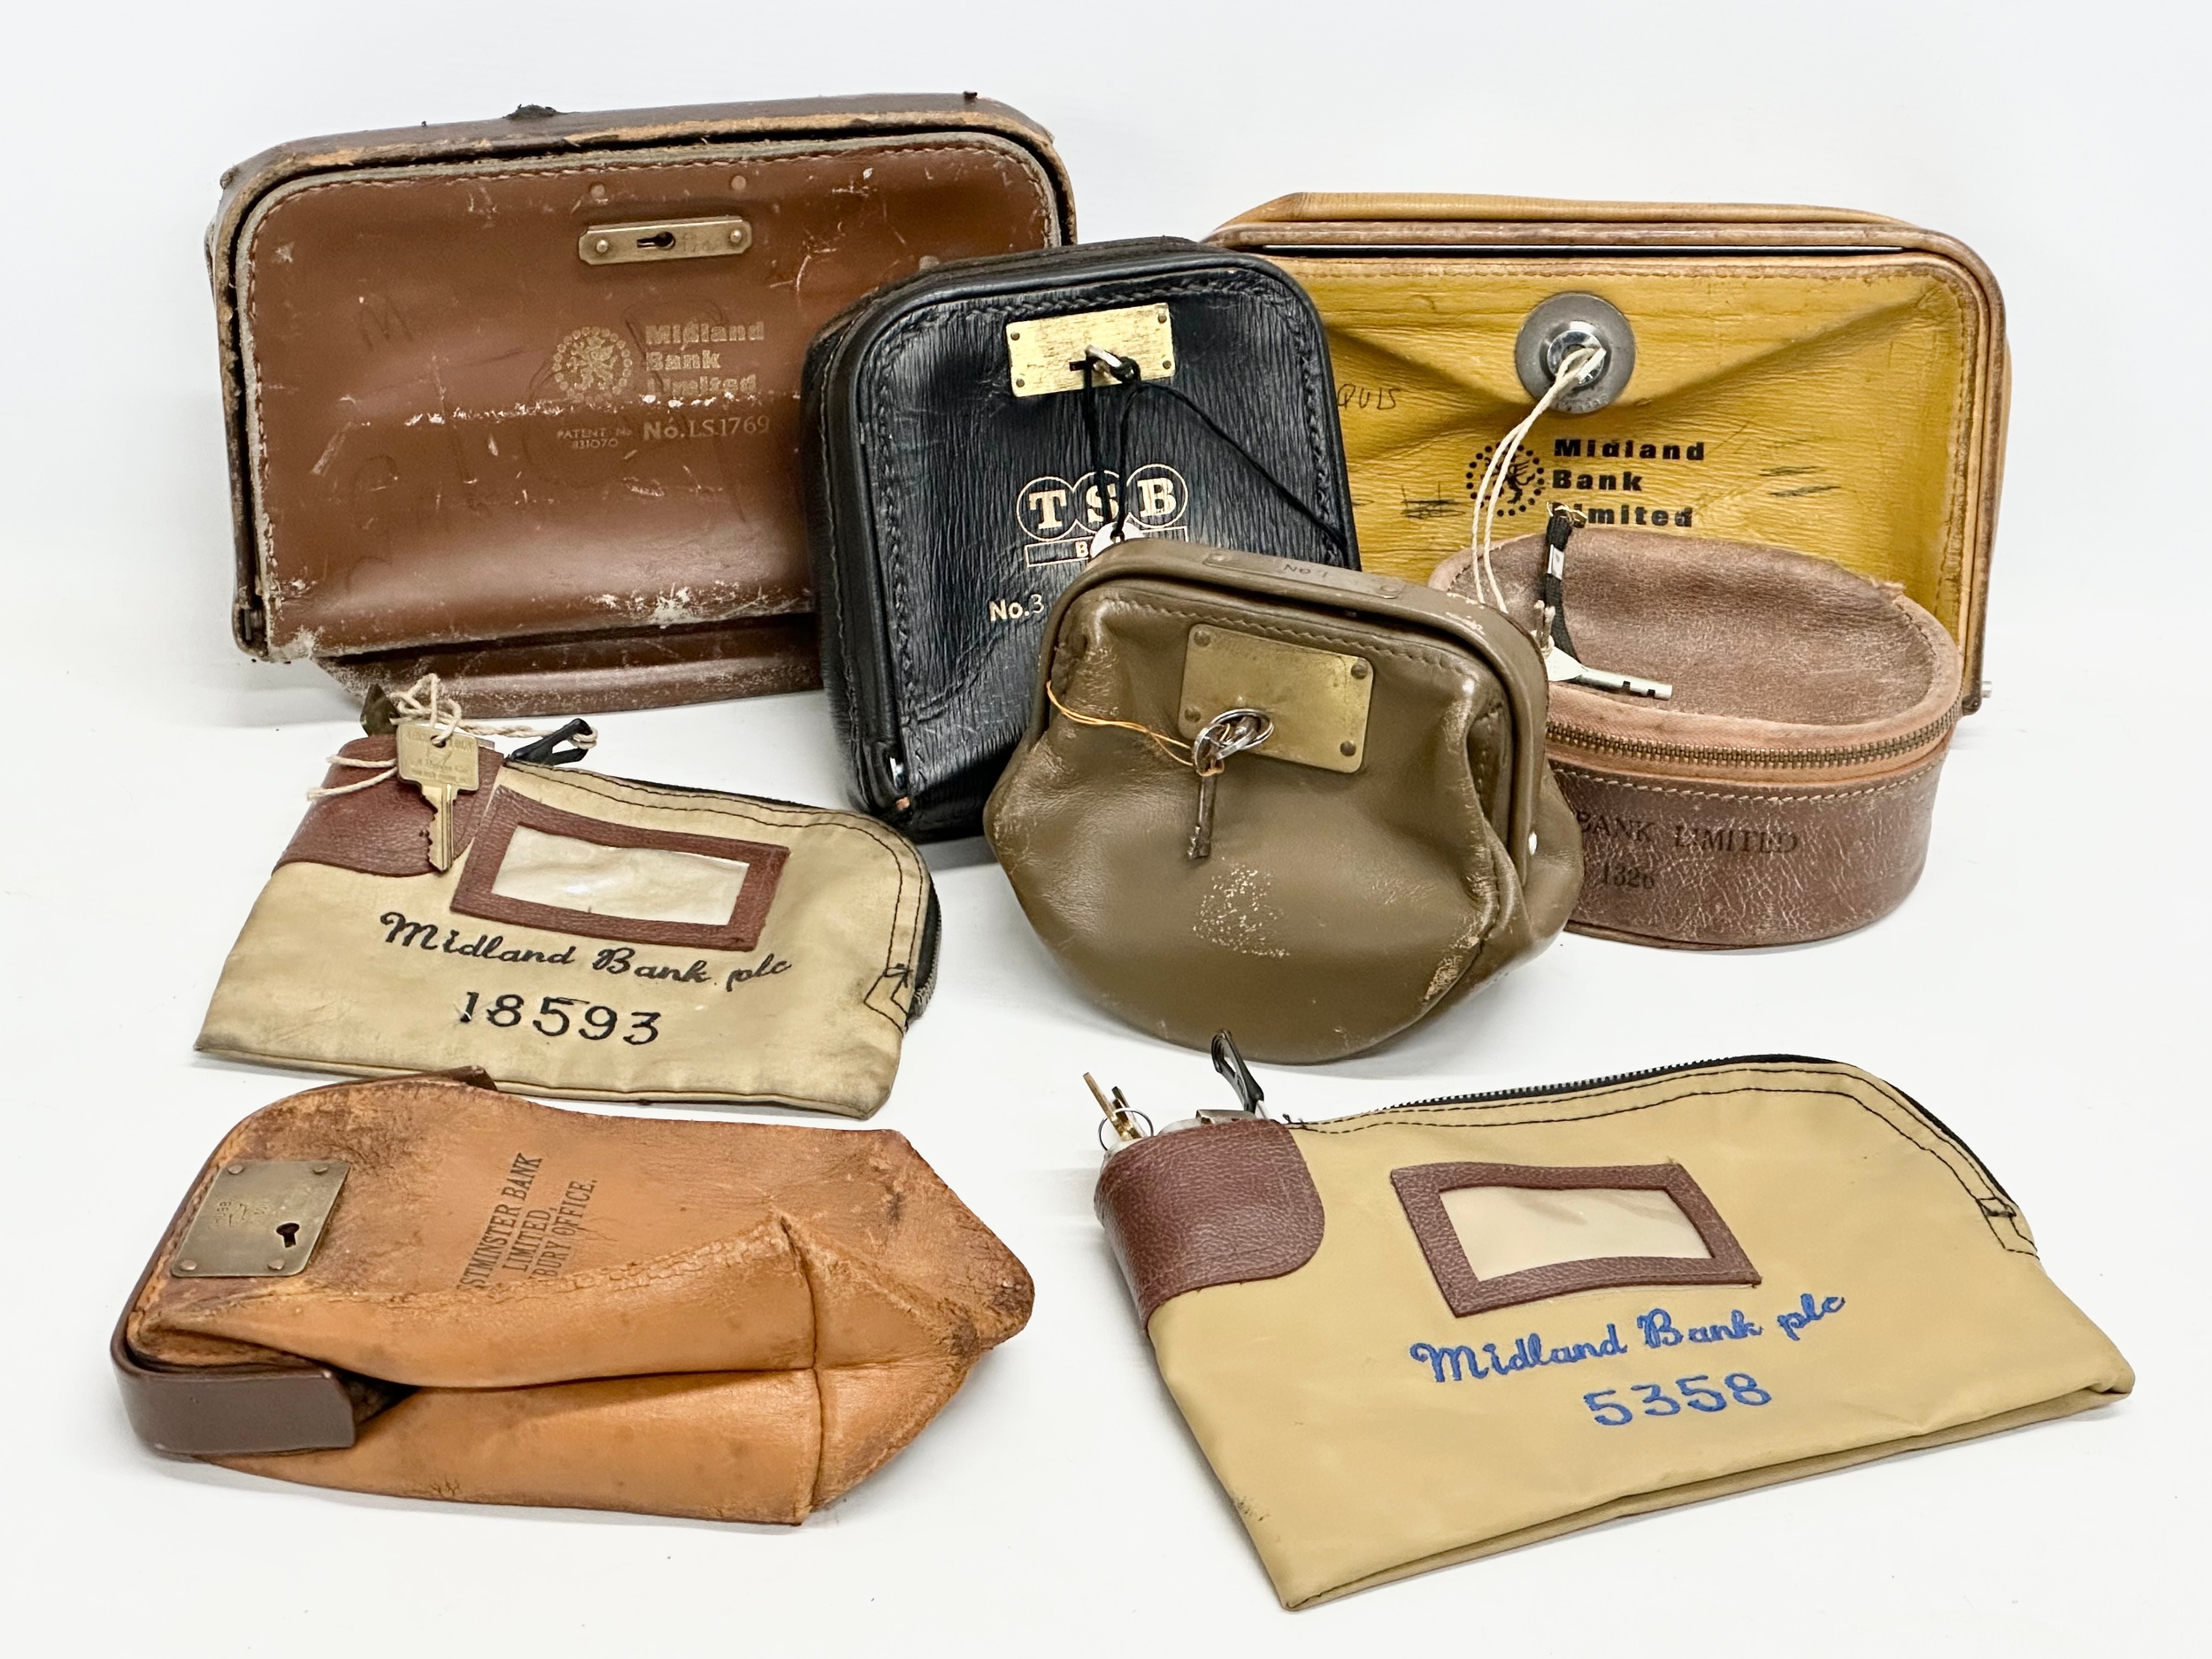 8 vintage Midland Bank and Westminster Bank leather safe bags.